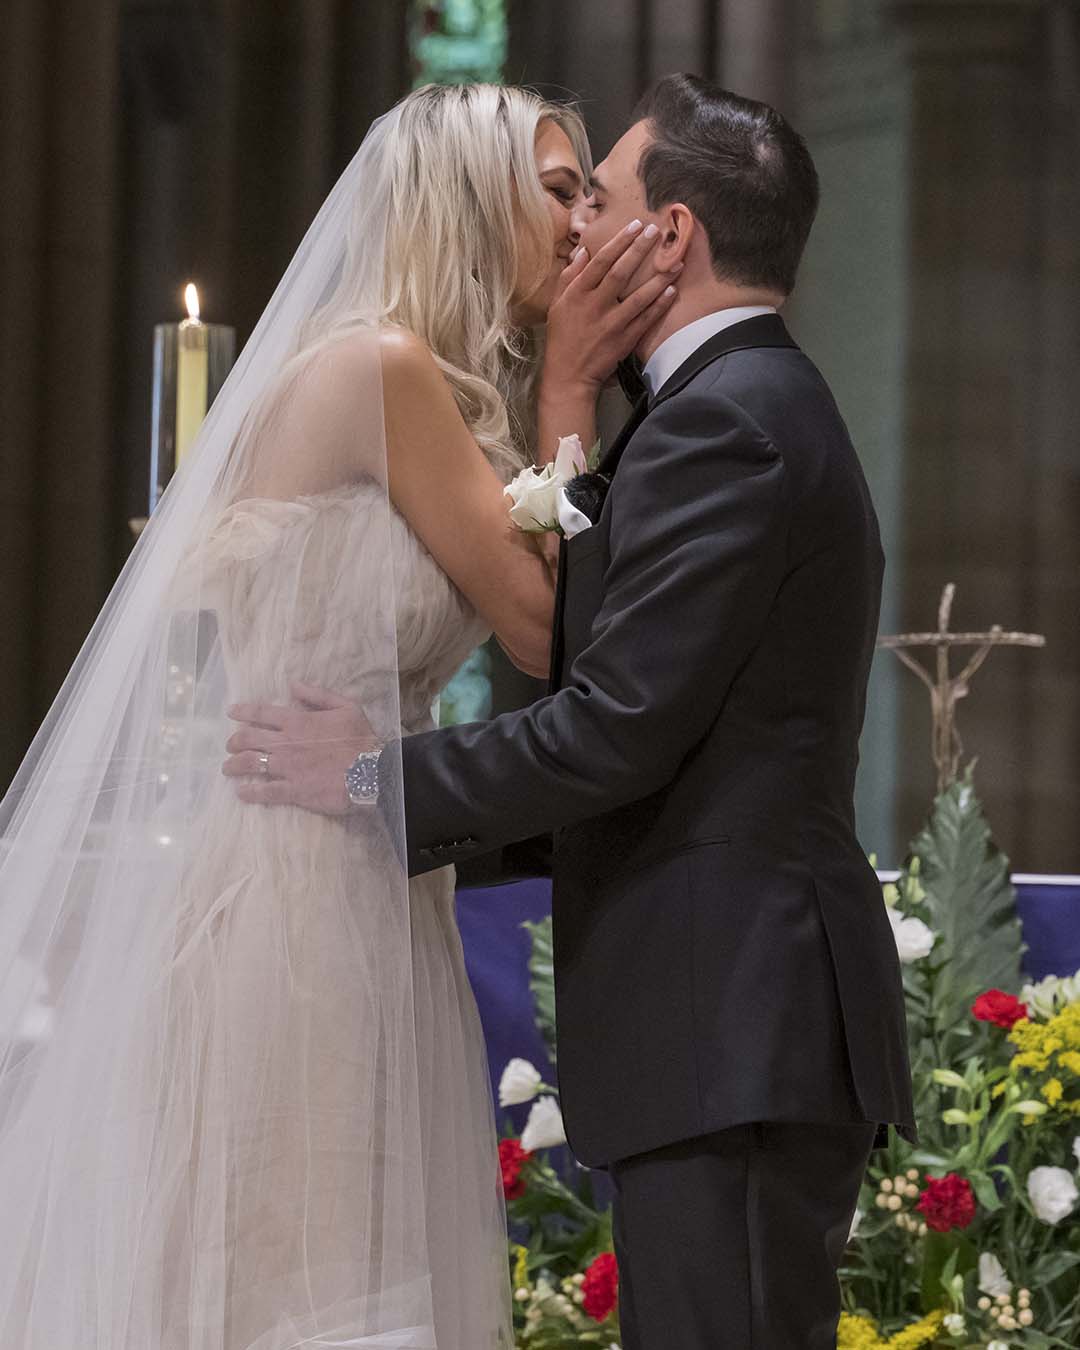 real wedding tayler and jayden ceremony kiss